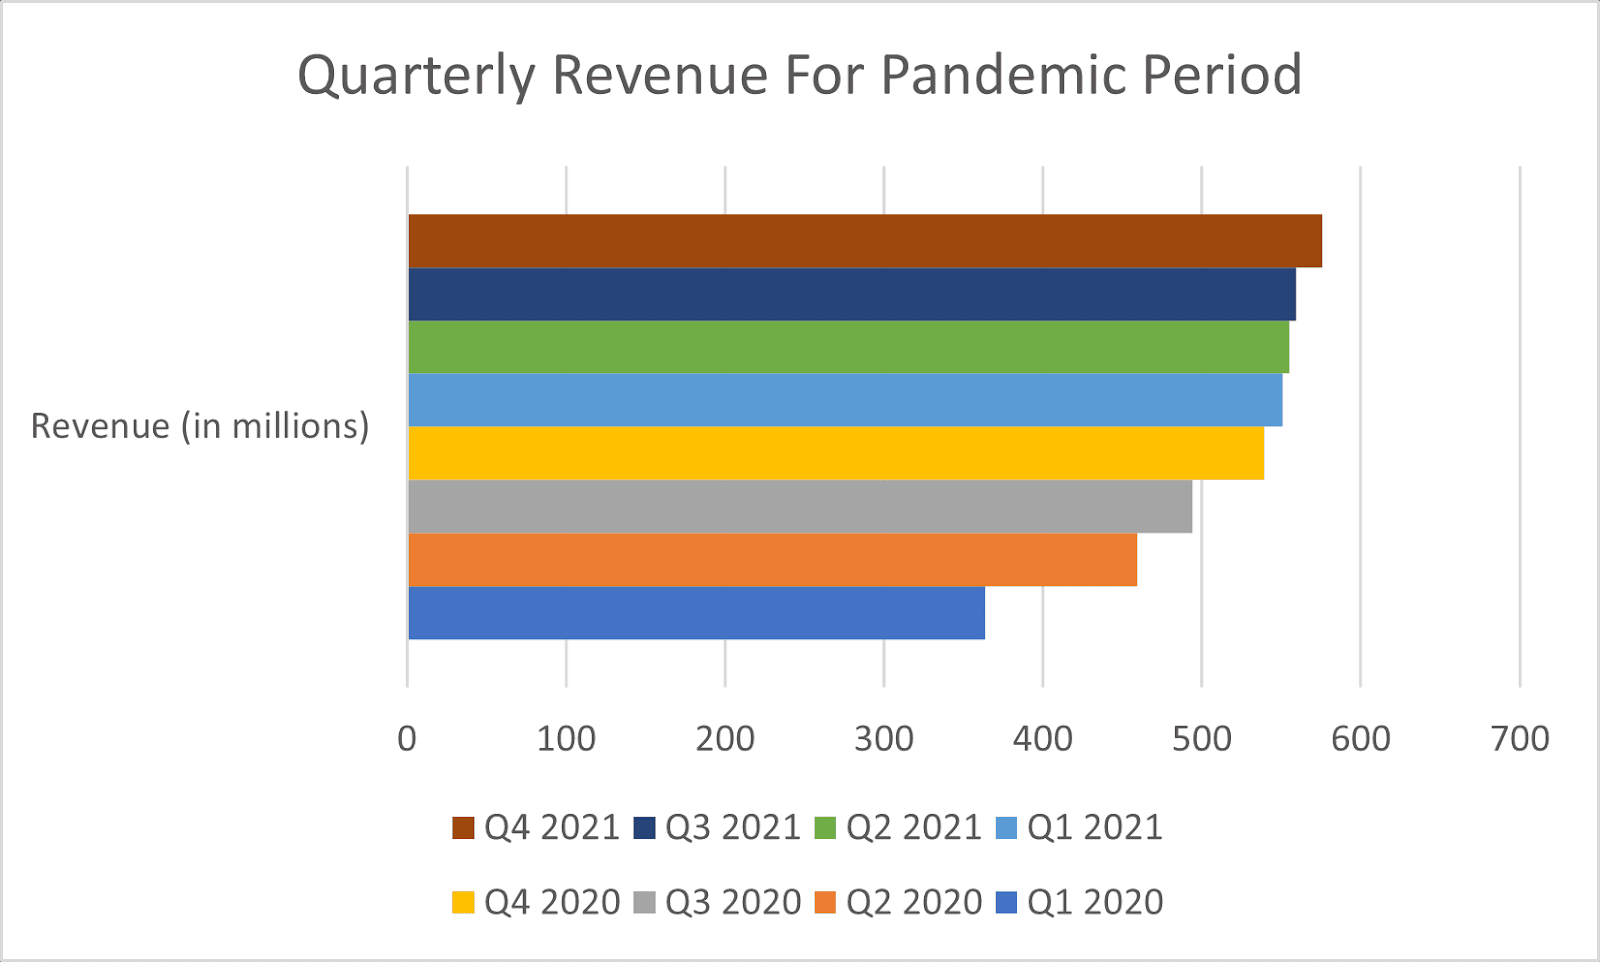 Grubhub quarterly revenue from 2020 to 2021 on jwalantpatel.com